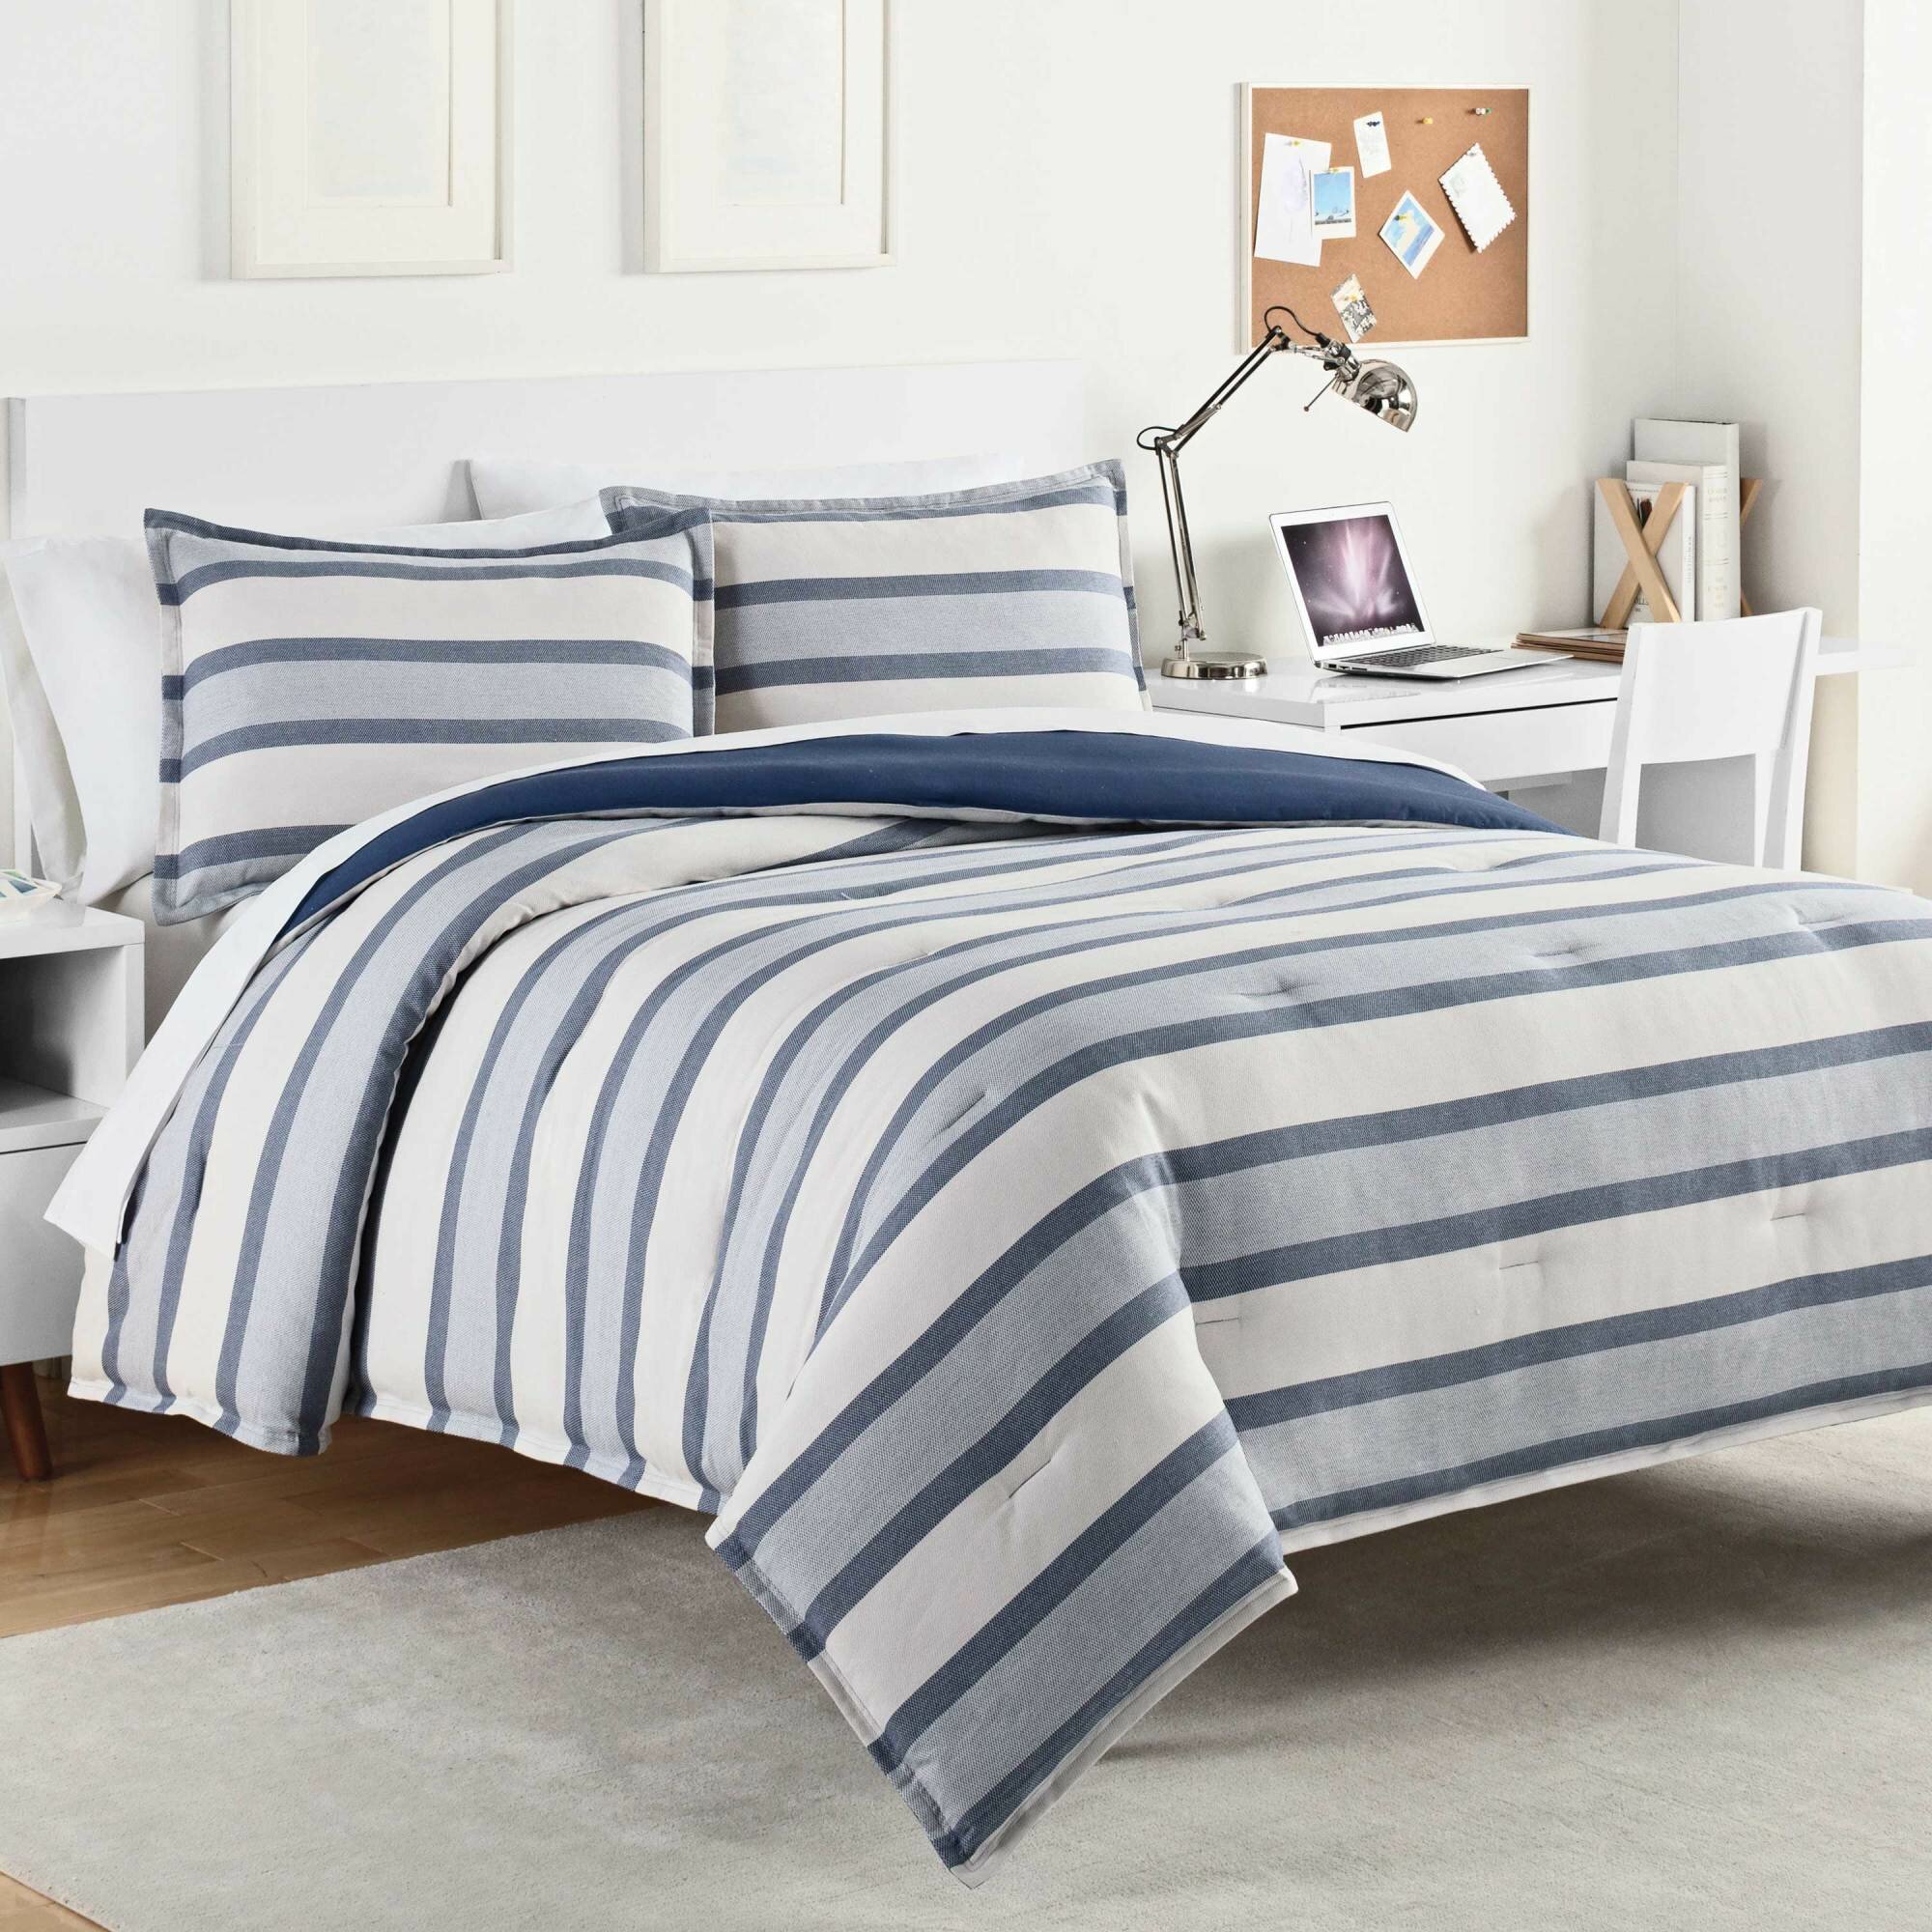 Izod Kenton Reversible Comforter Set Reviews Wayfair